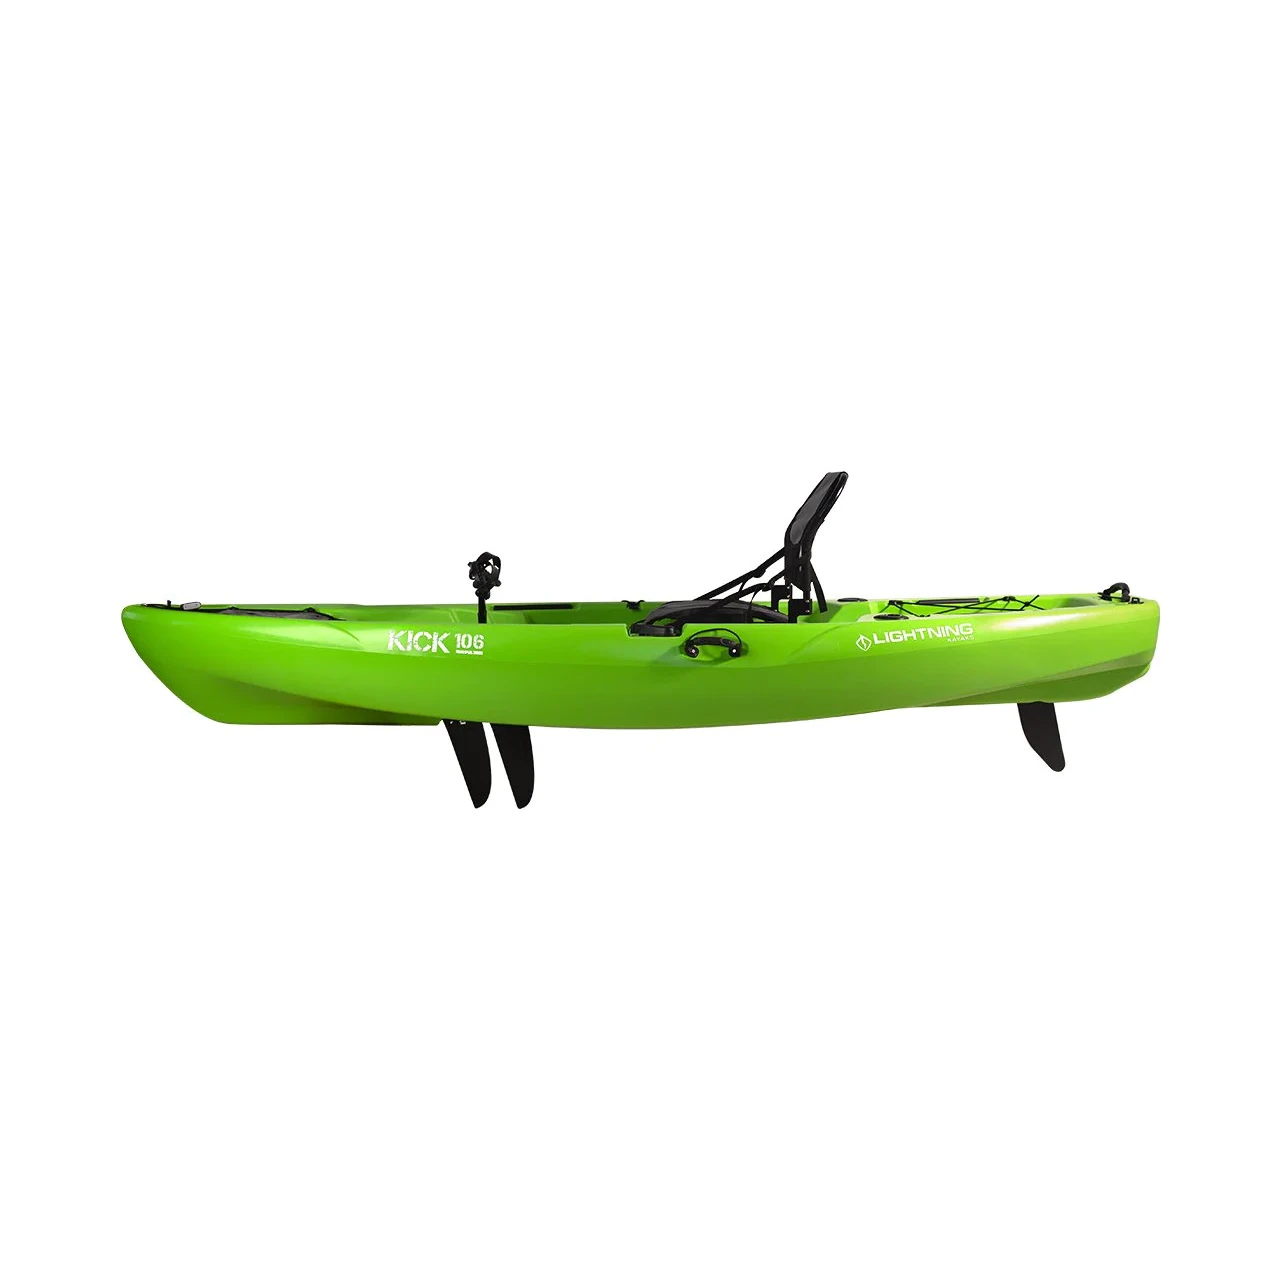 10"6" Lightning Kick 106 Pedal Drive Fishing Kayak